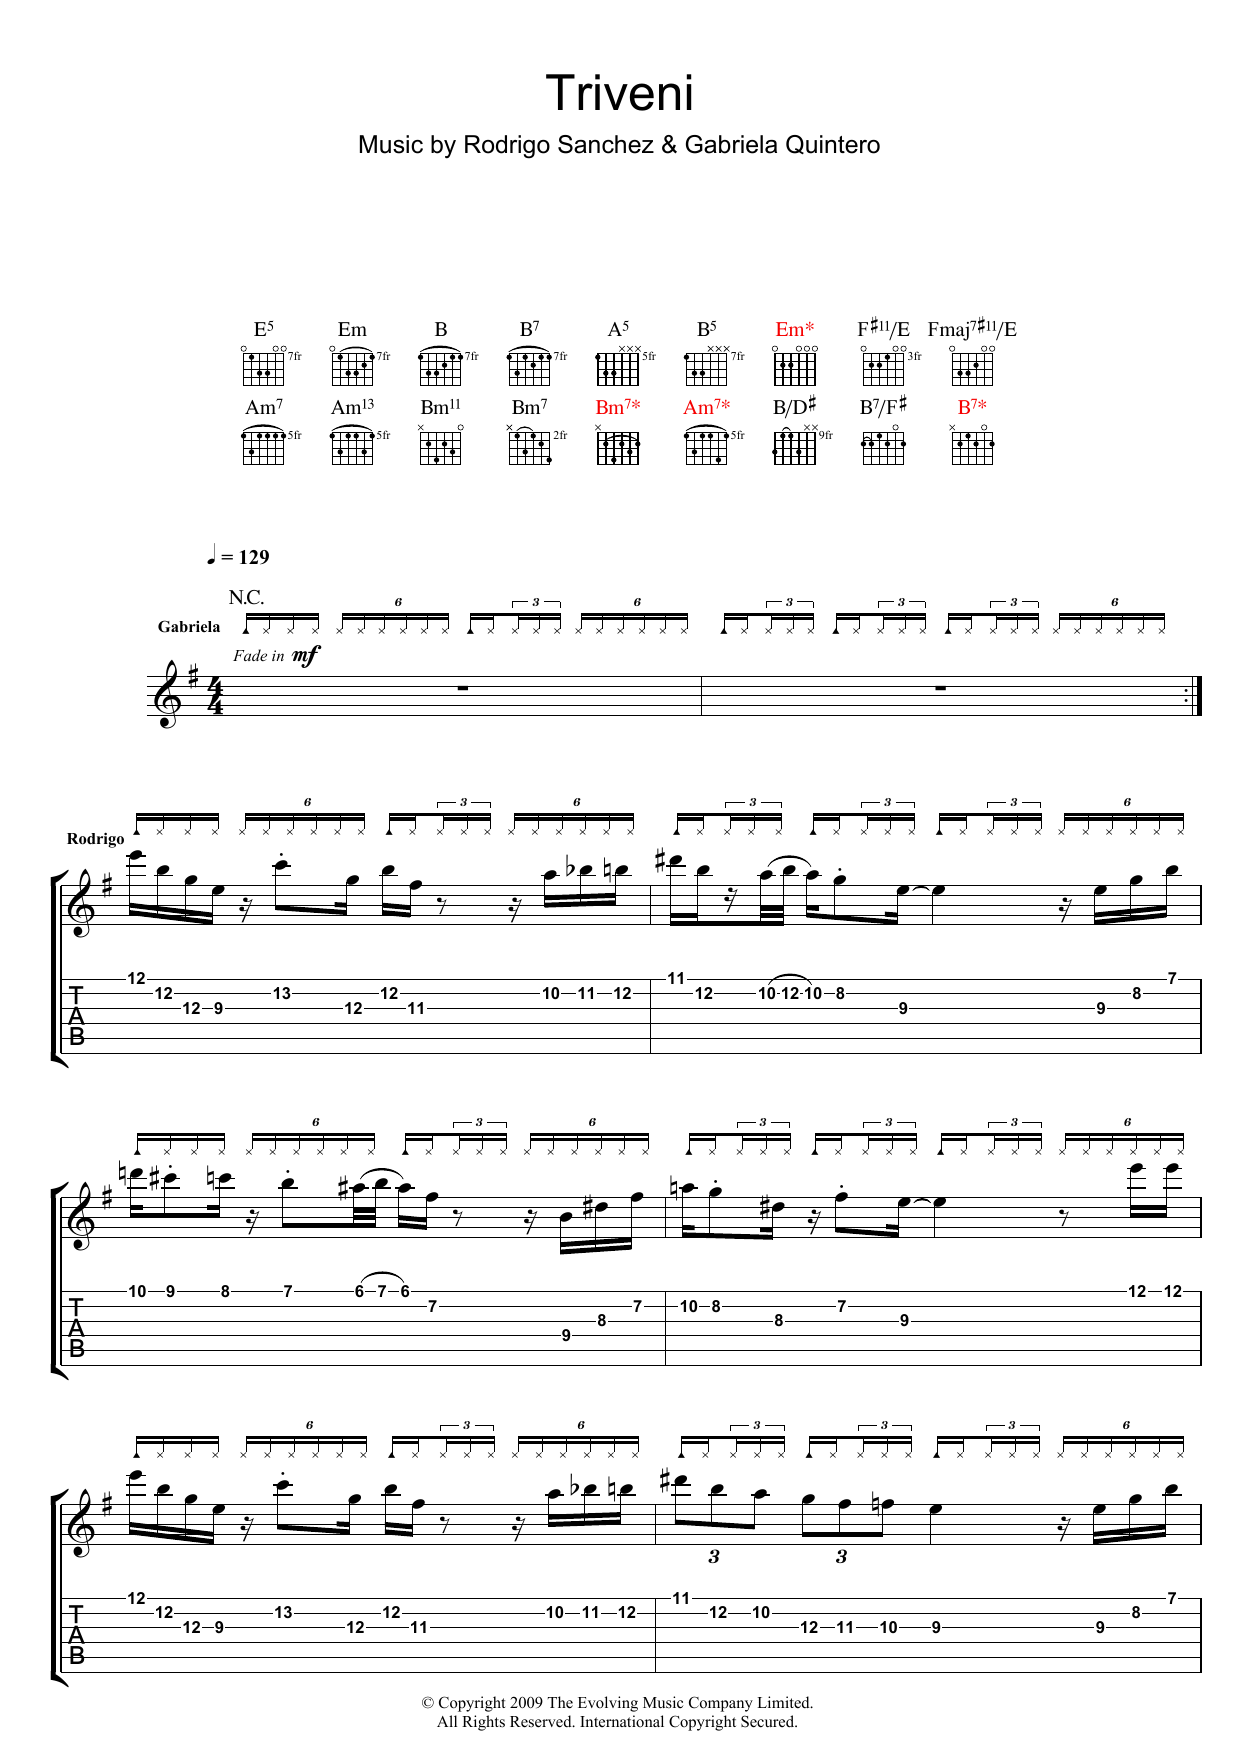 Rodrigo y Gabriela Triveni Sheet Music Notes & Chords for Guitar Tab - Download or Print PDF